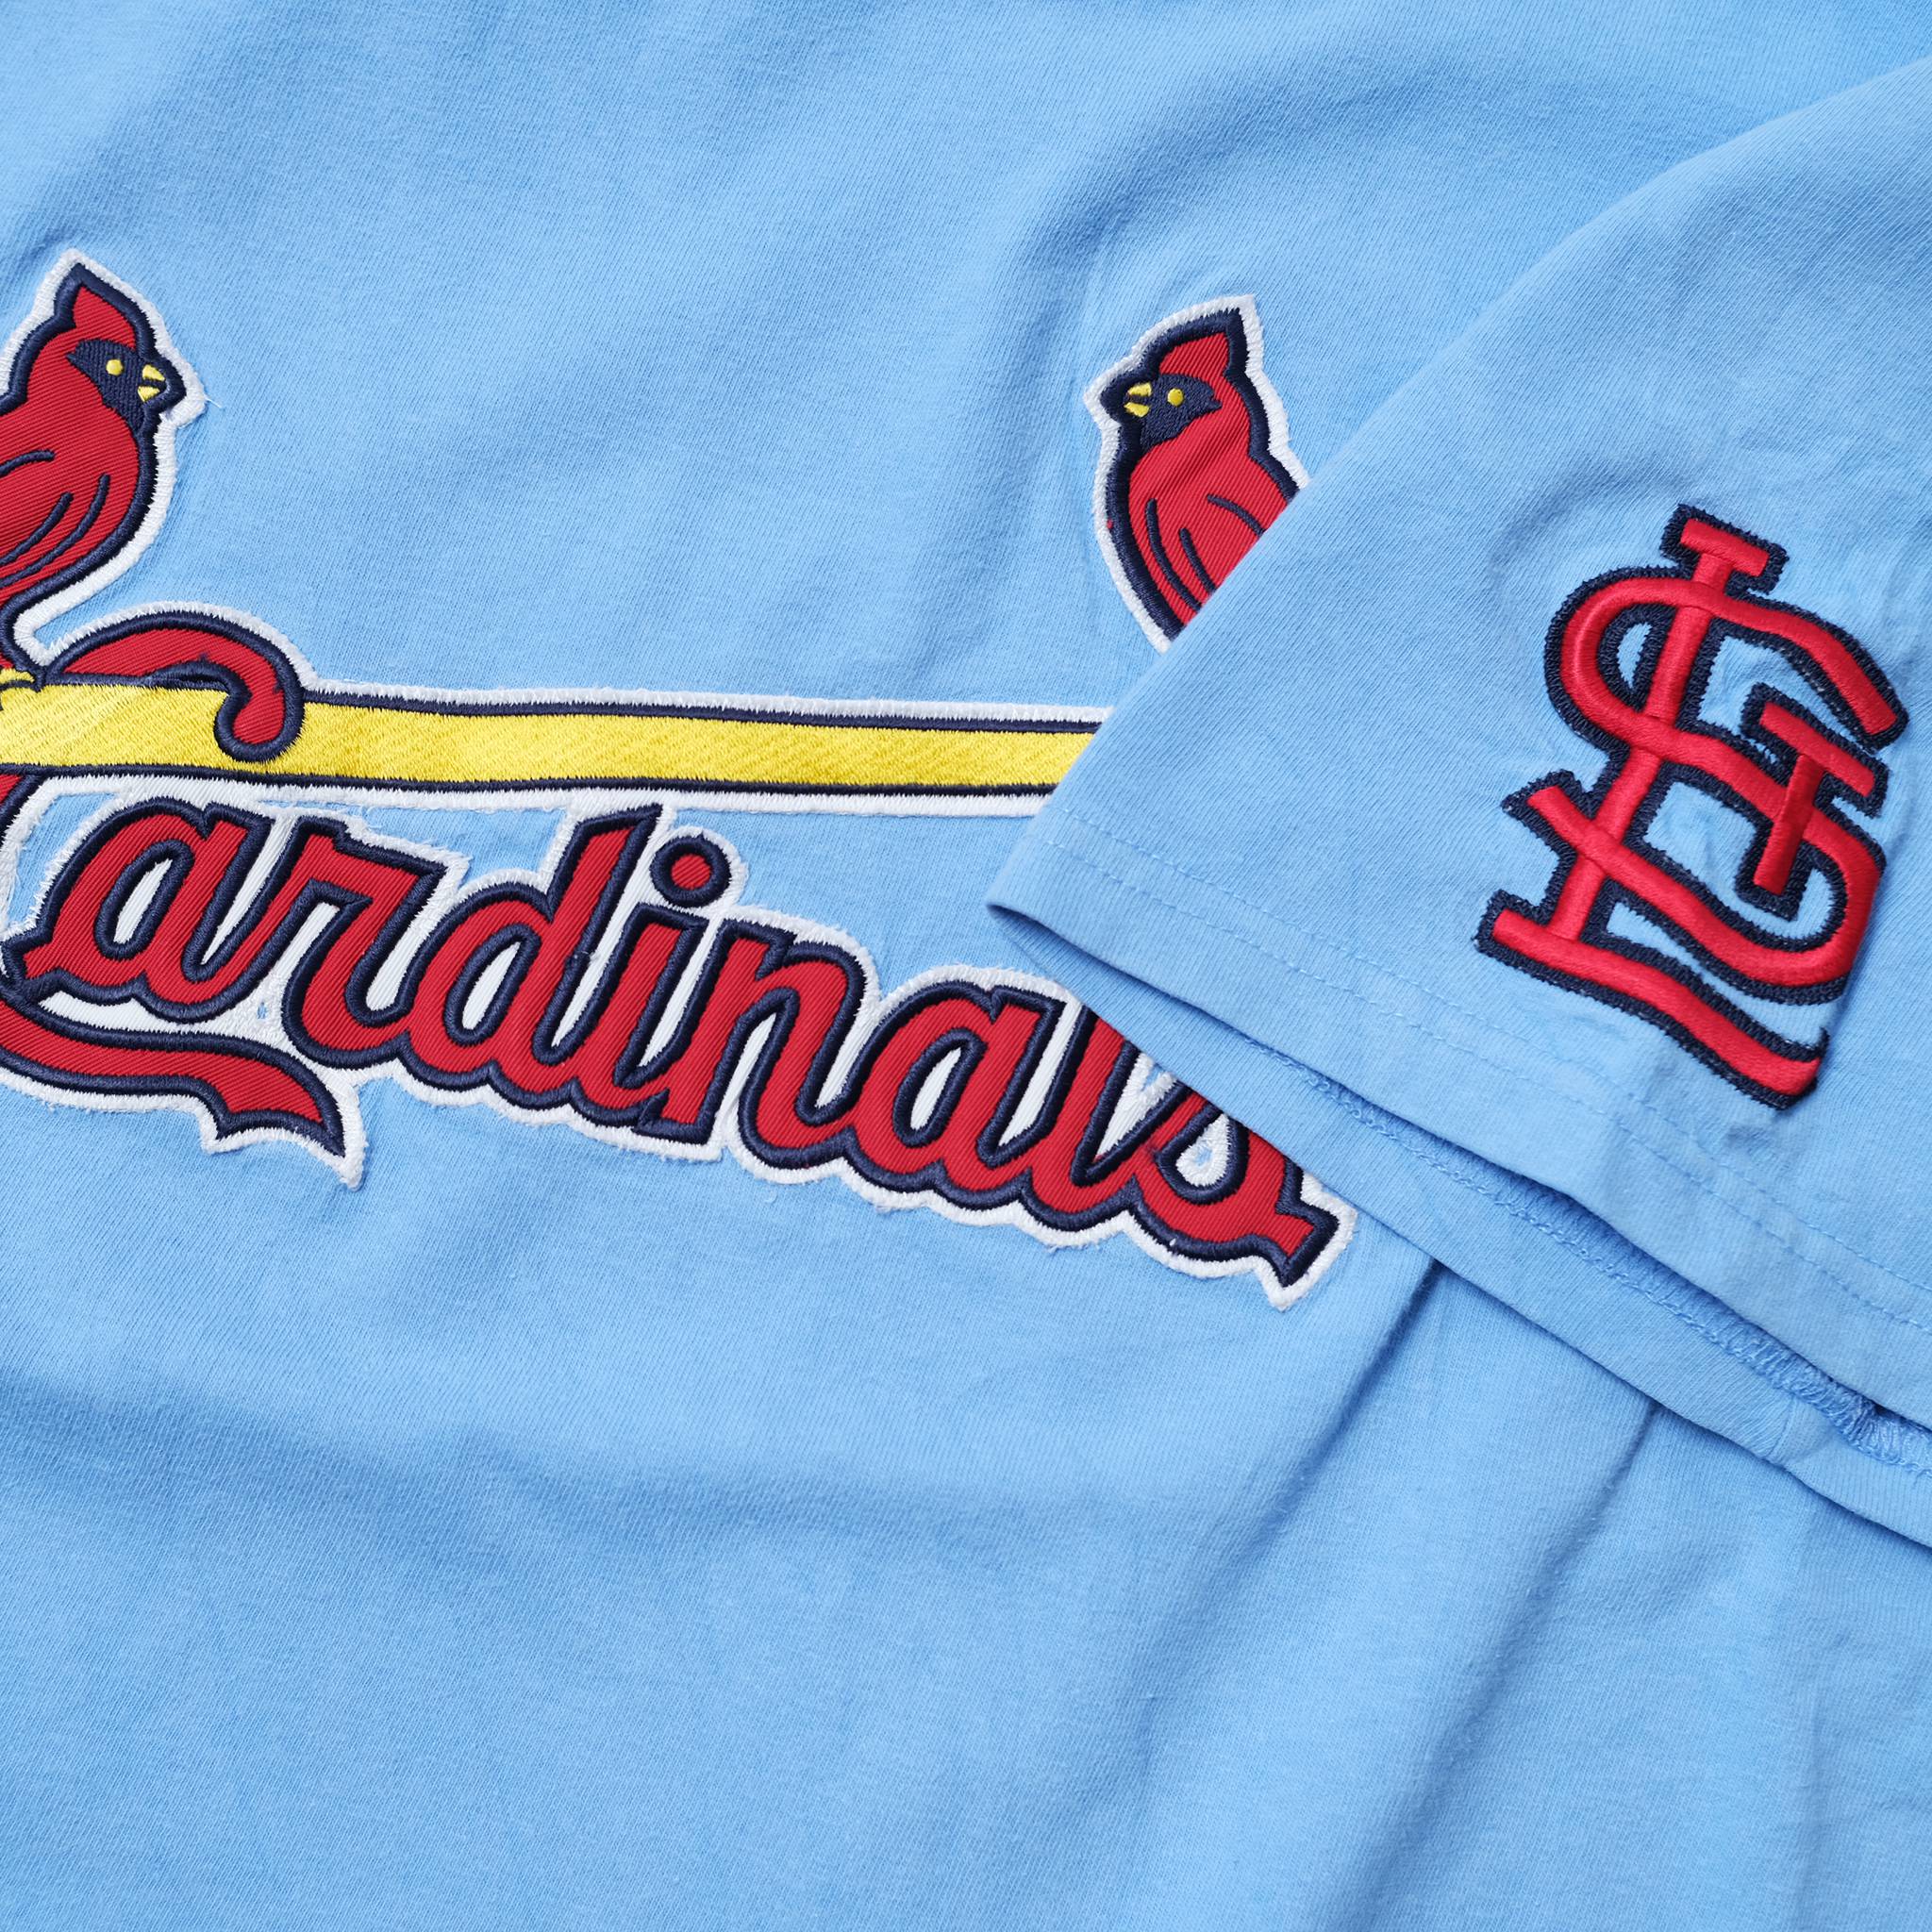 Vintage St. Louis Cardinals T-Shirt Men’s Size 2XL Logo 7 Made in USA Navy  Blue